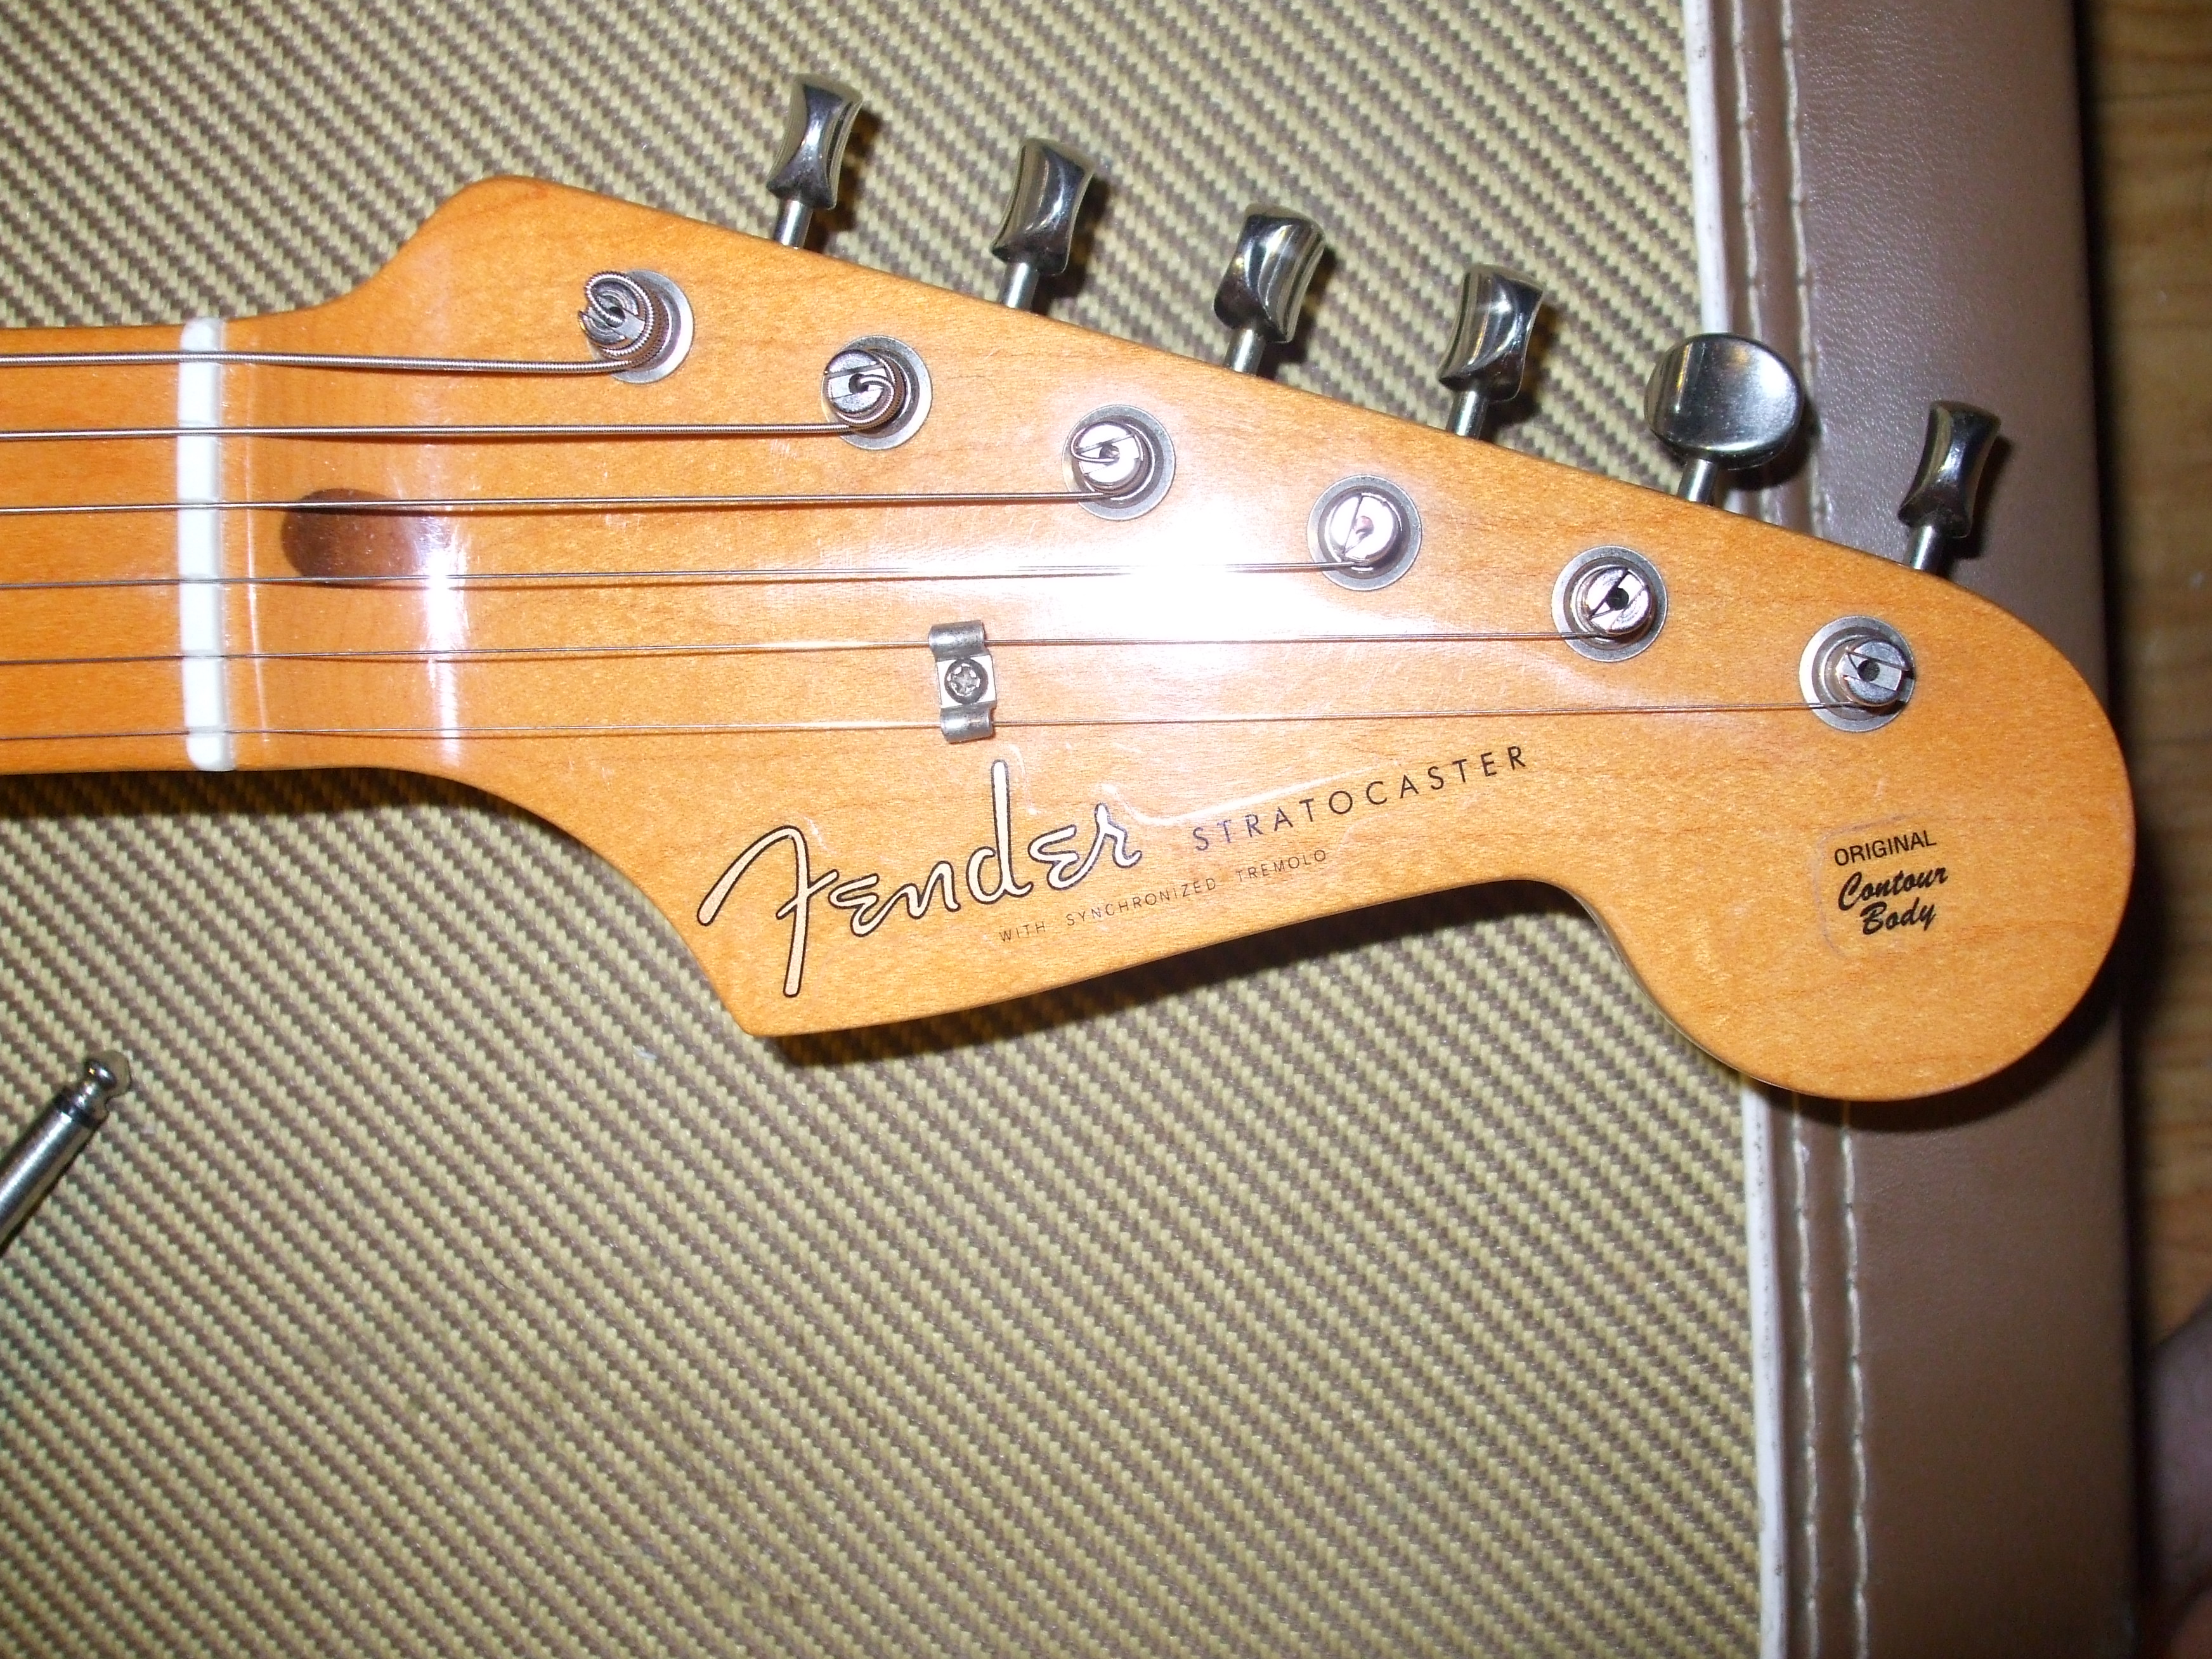 Fender American Vintage '57 Stratocaster image (#340105) - Audiofanzine